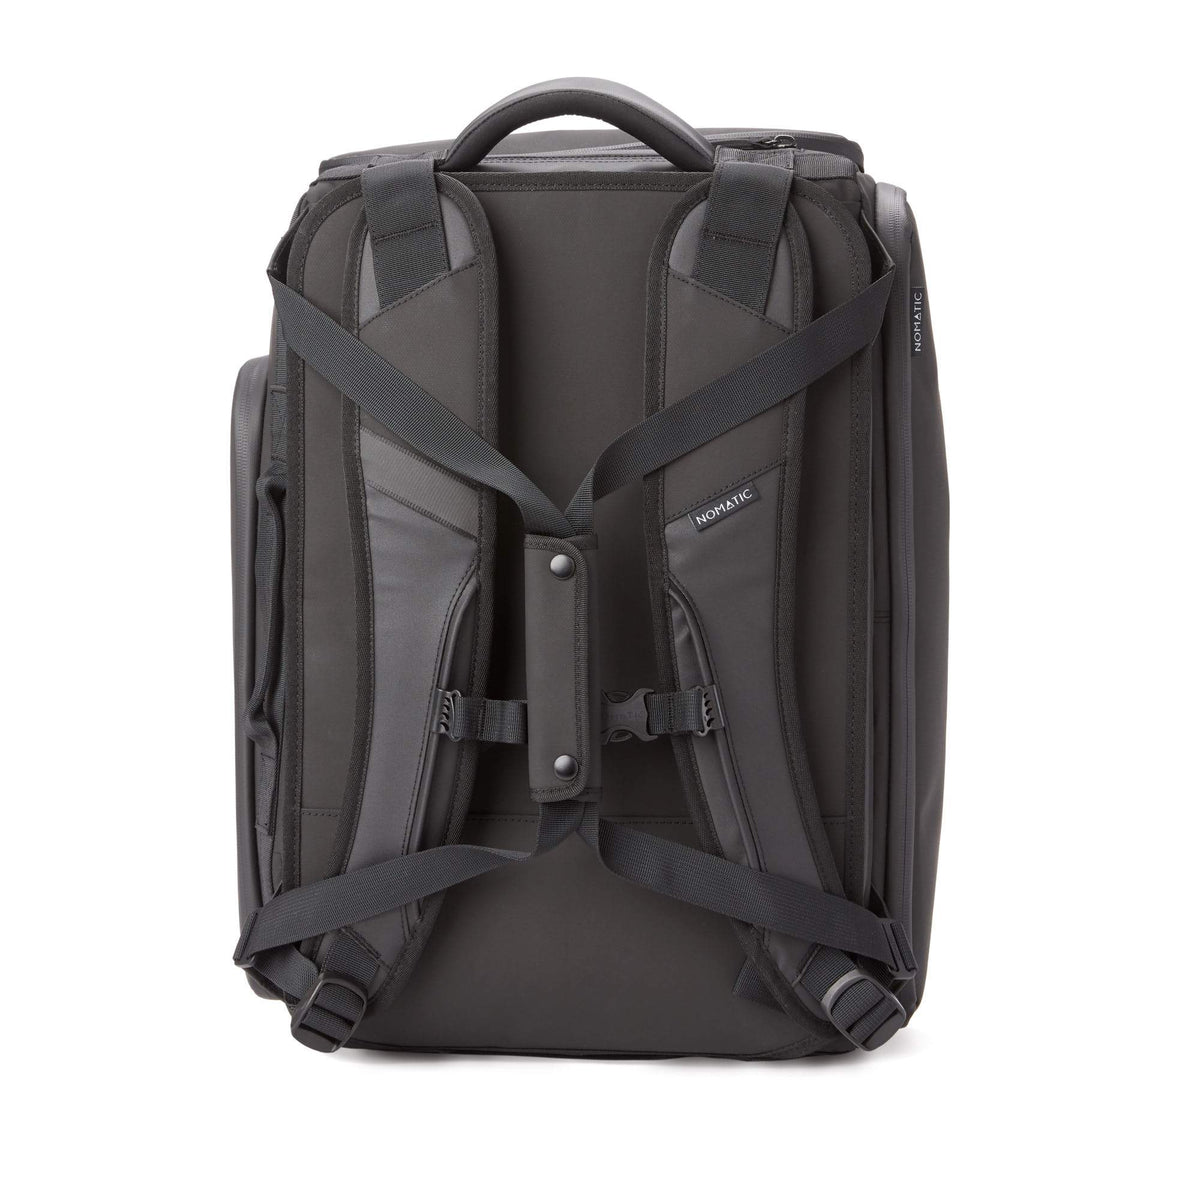 Nomatic Travel Backpack - 30L